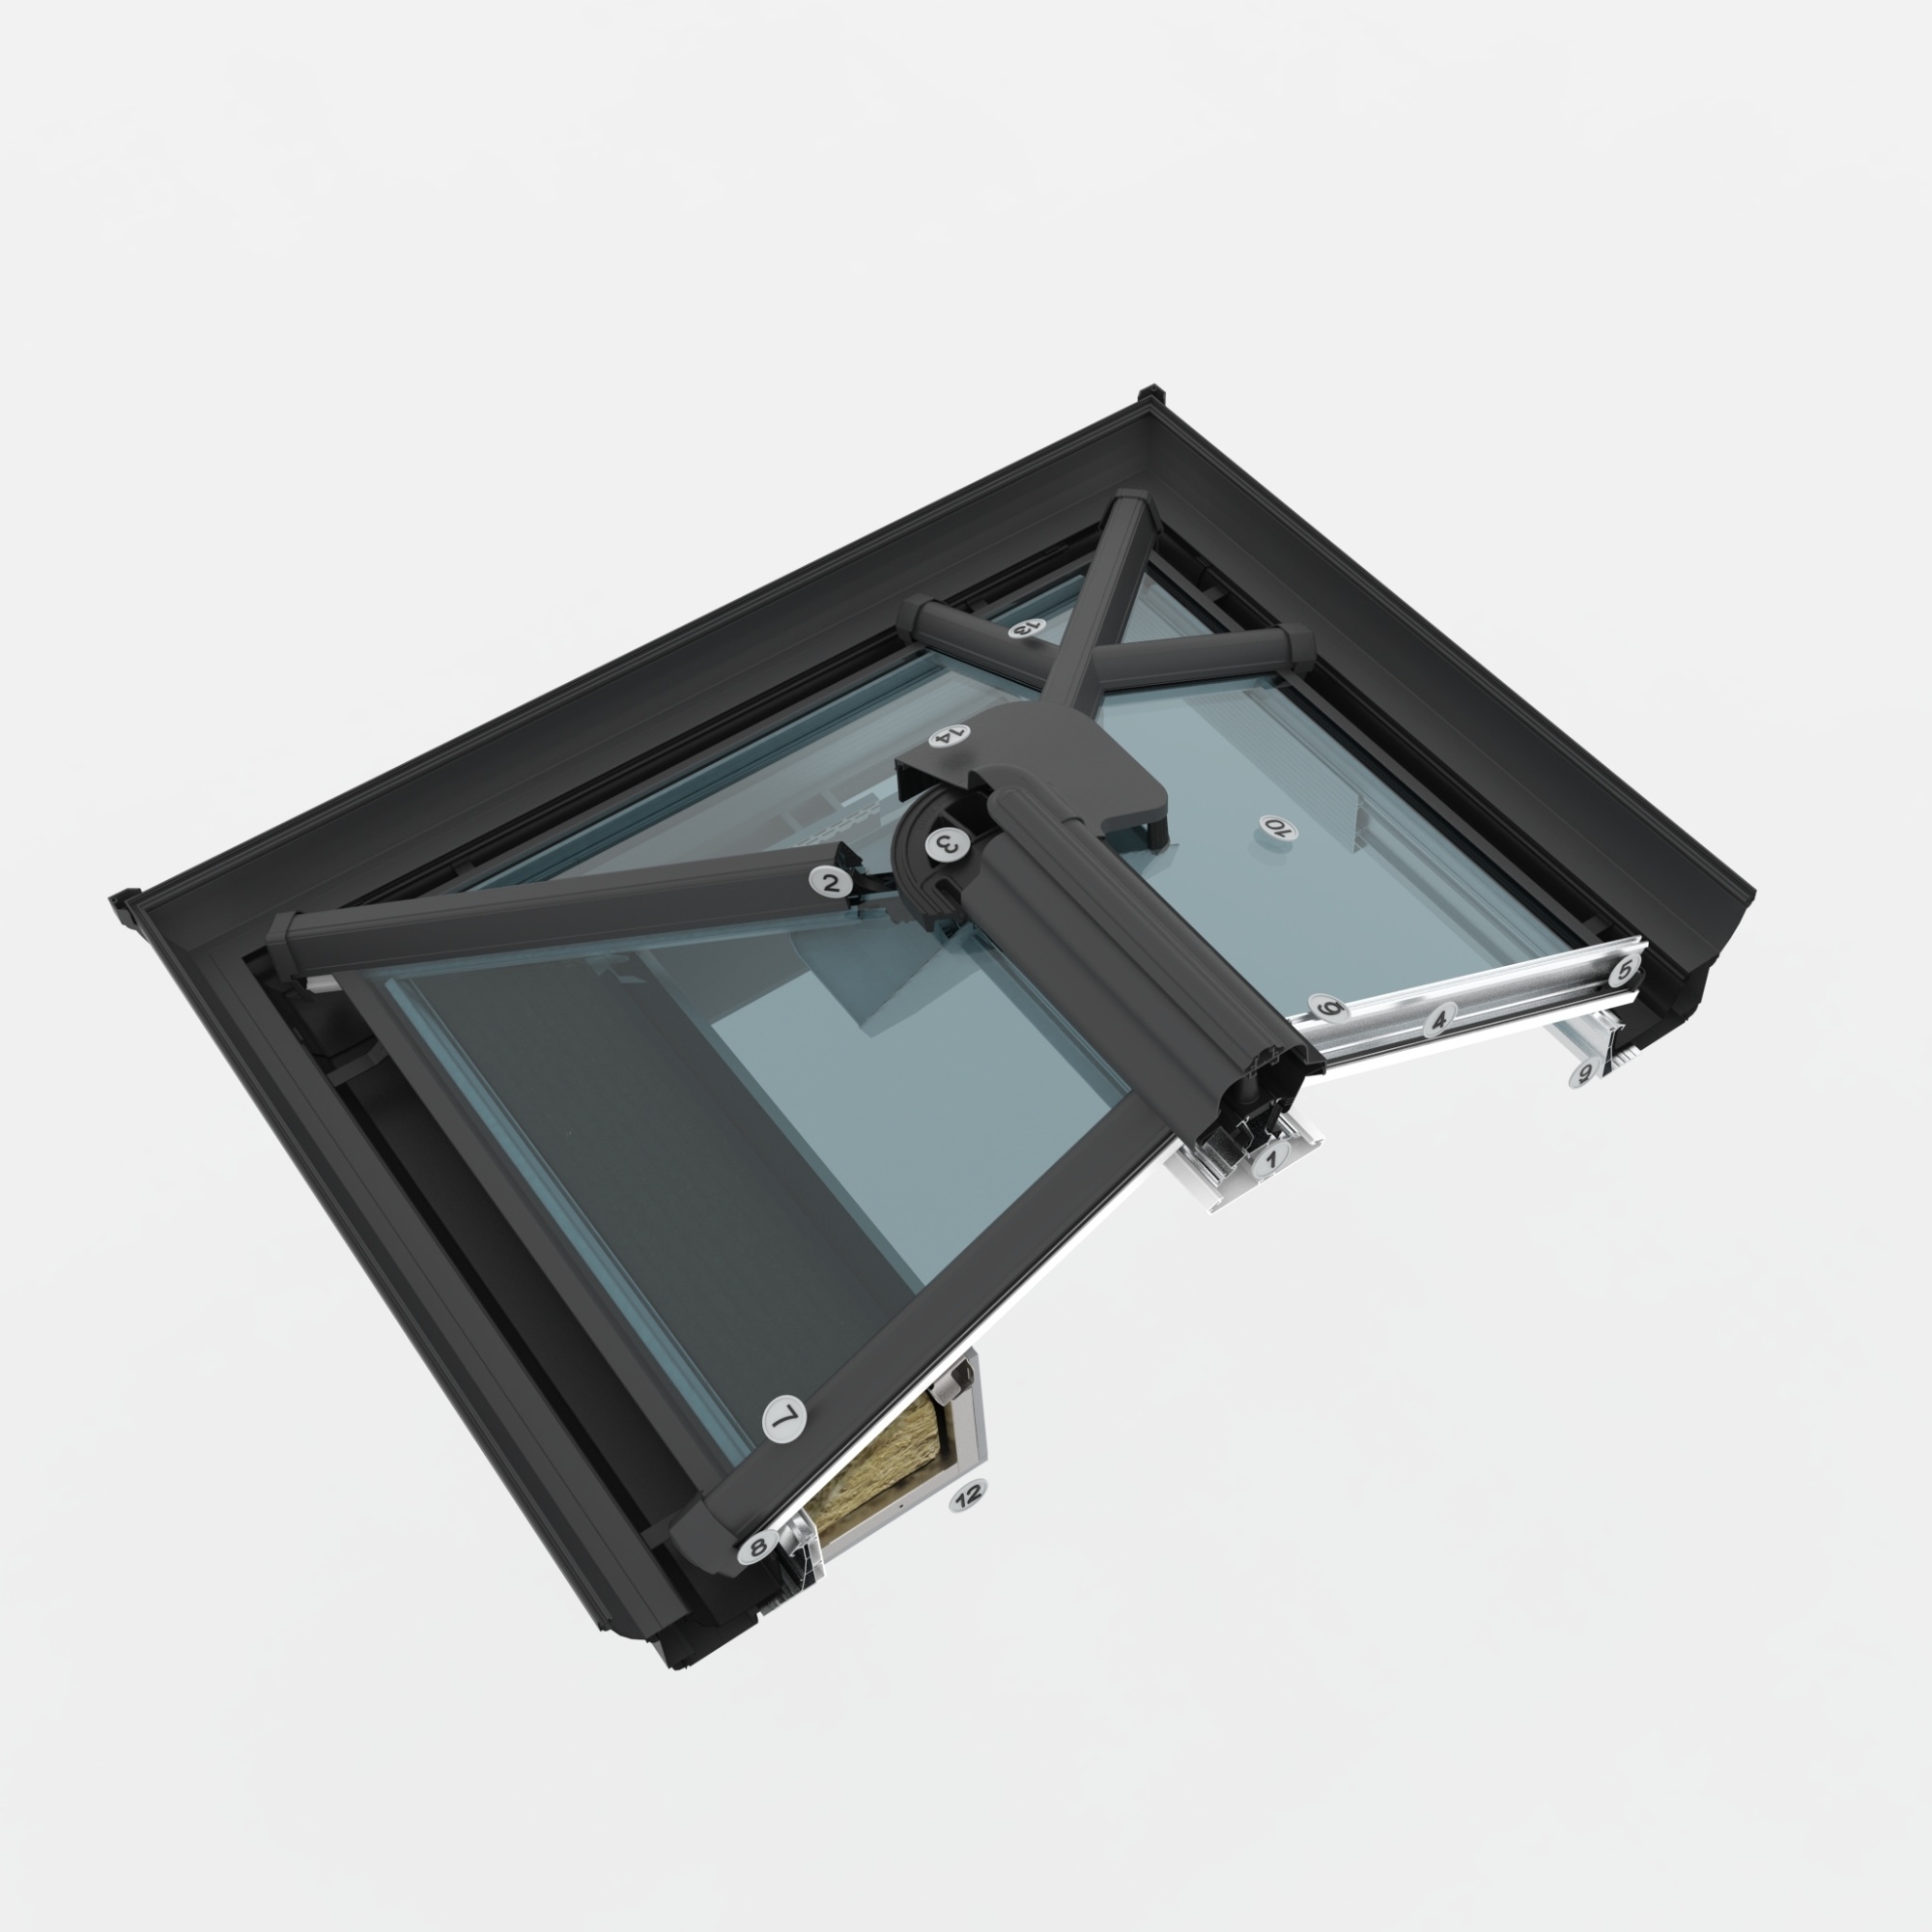 The Glass Roof digital sample from Ultraframe